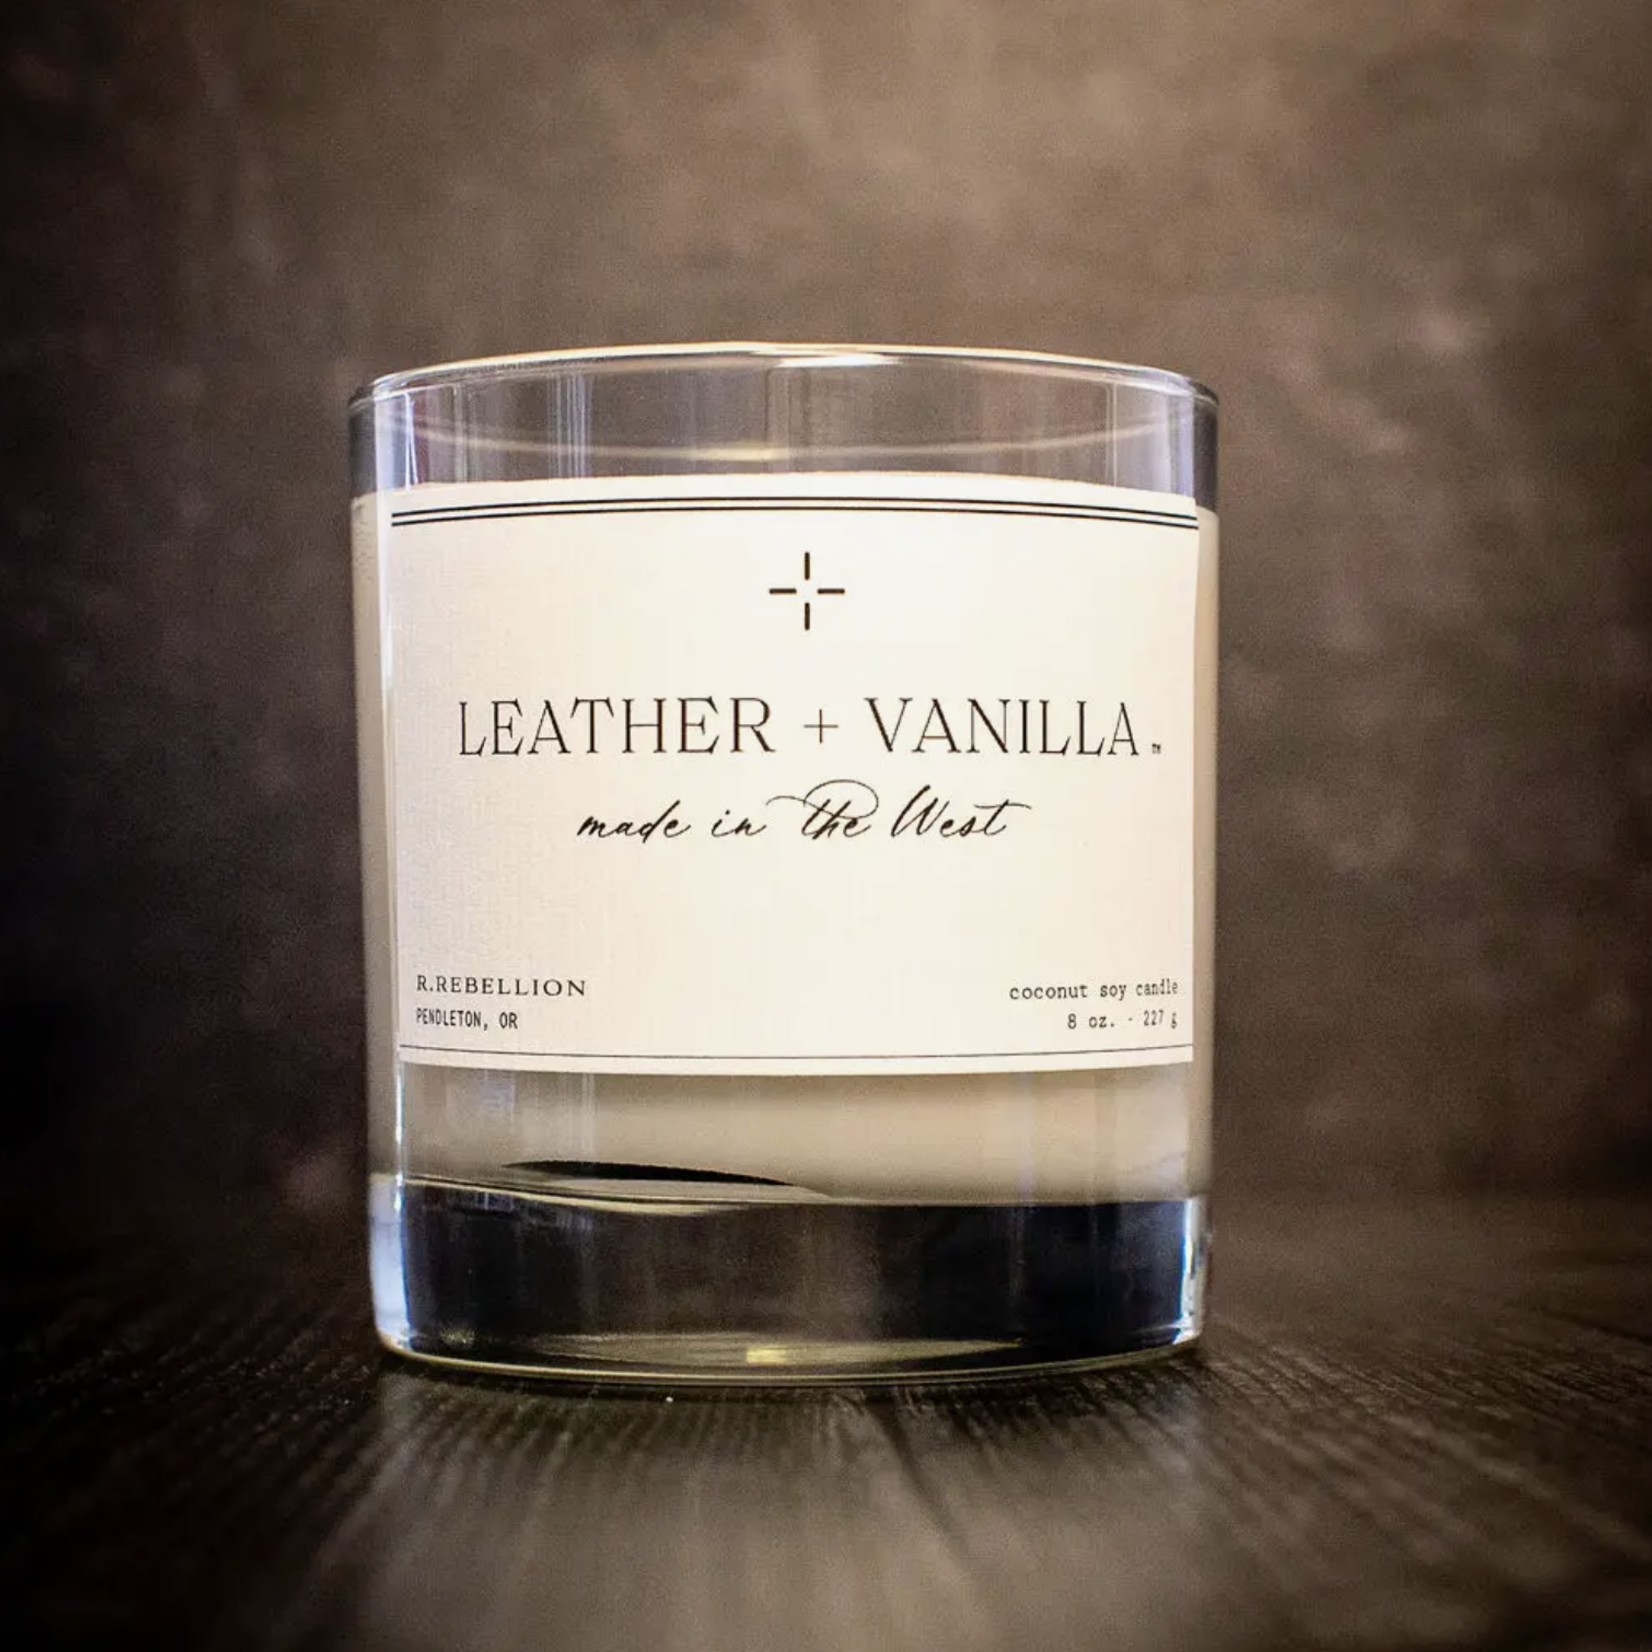 R. Rebellion Leather + Vanilla Candle 8 oz.